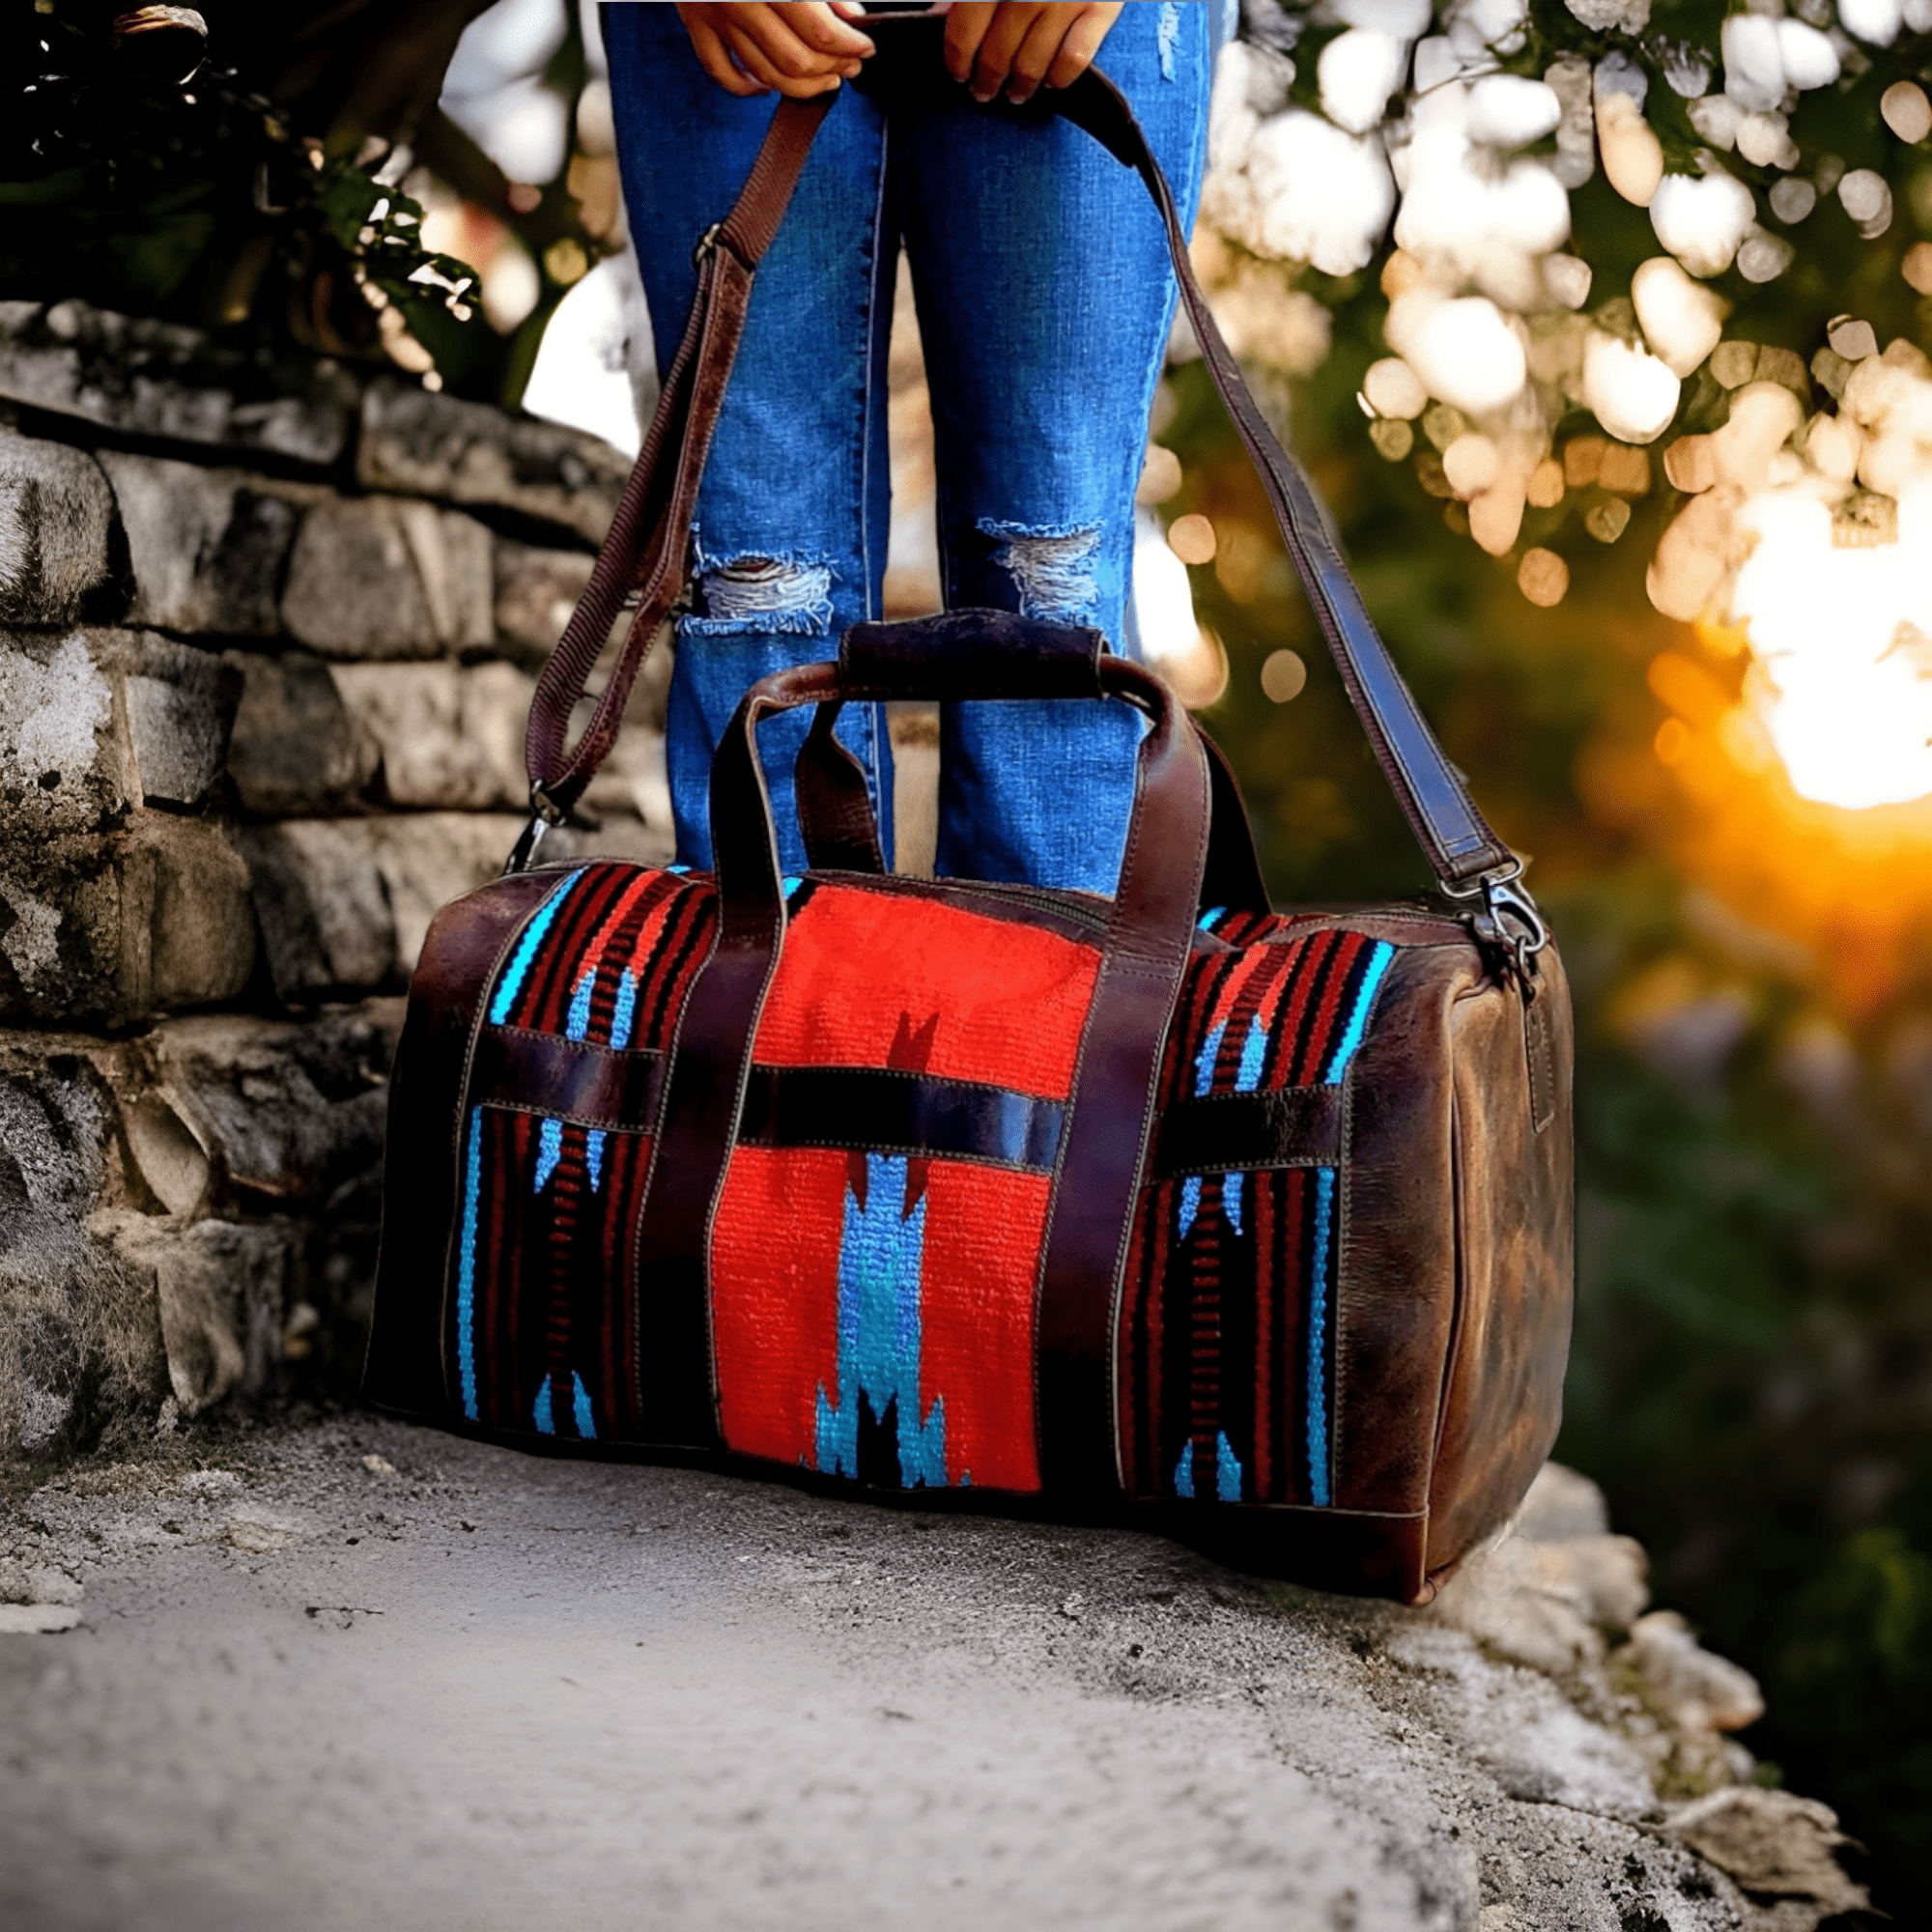 The Sedona Southwestern Leather Aztec Weekender Duffel Bag - 45L Luggage & BagsRanch Junkie